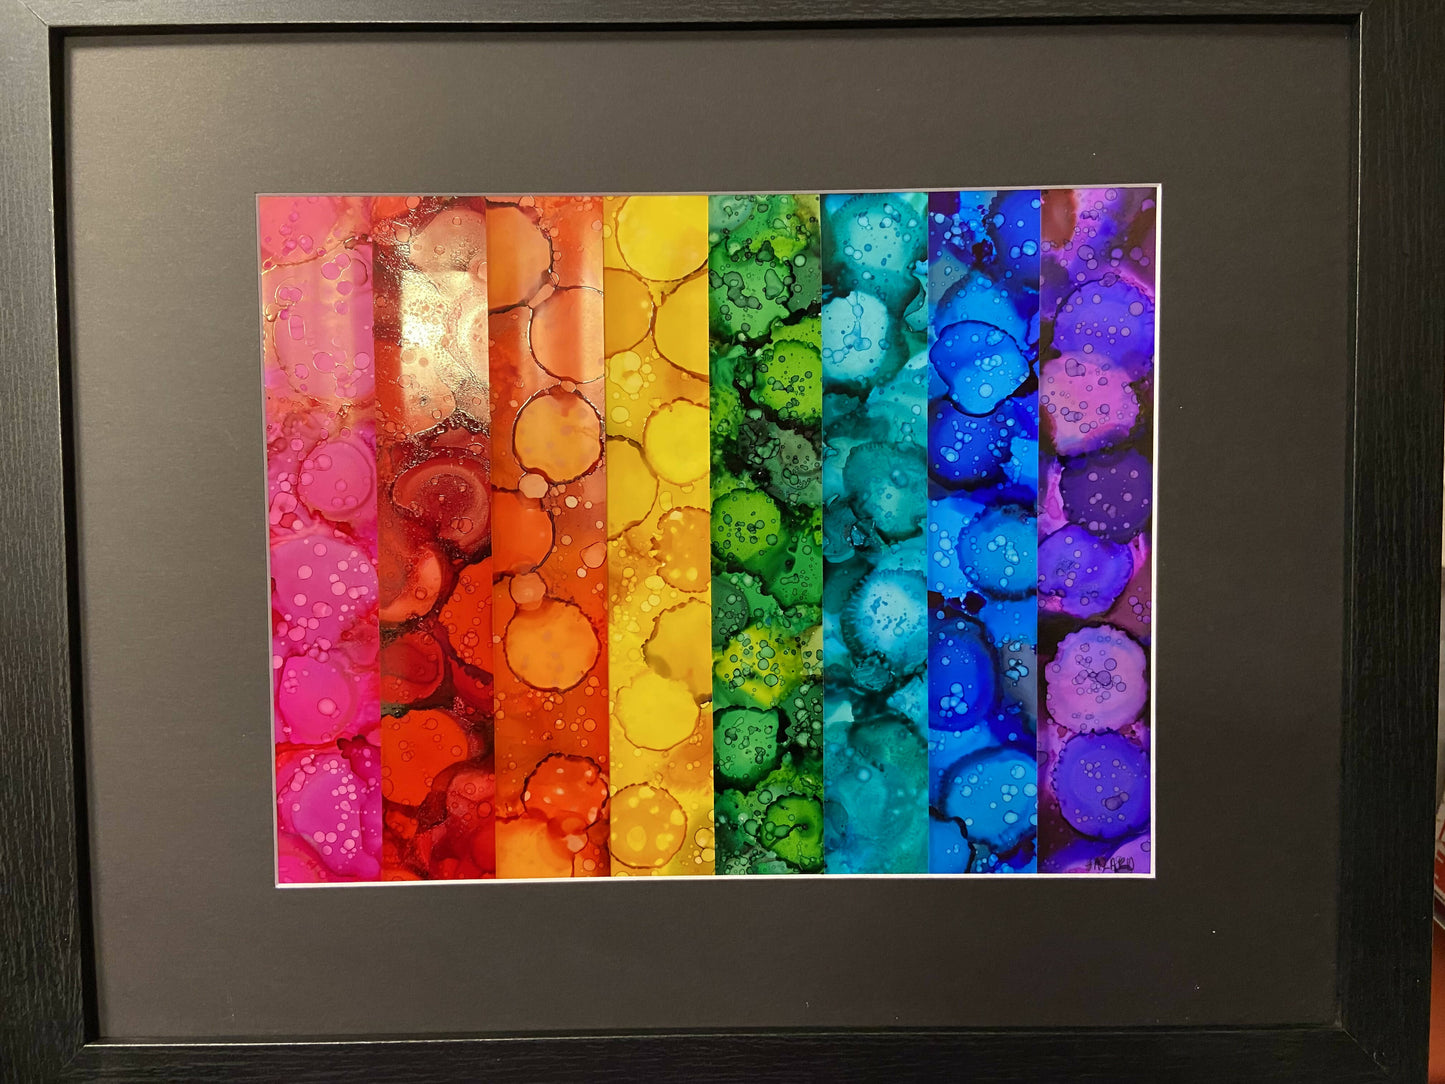 Framed Alcohol Ink Rainbow Art On Yupo 16 x 20